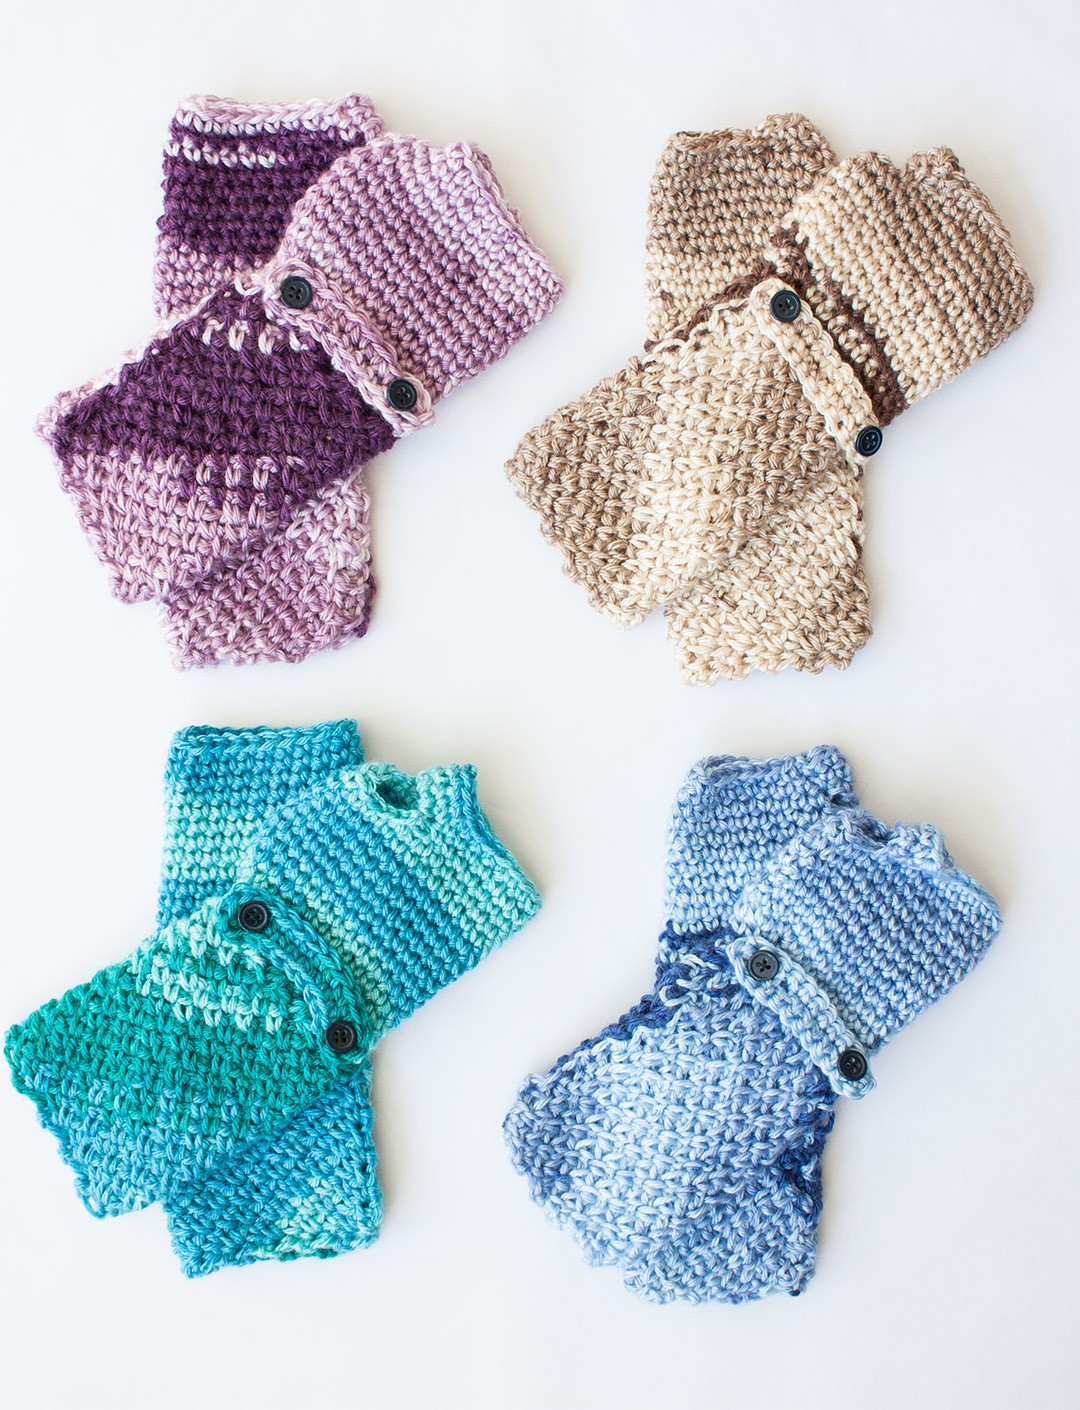 crochet gloves cozy posy - fingerless gloves rzguzsz